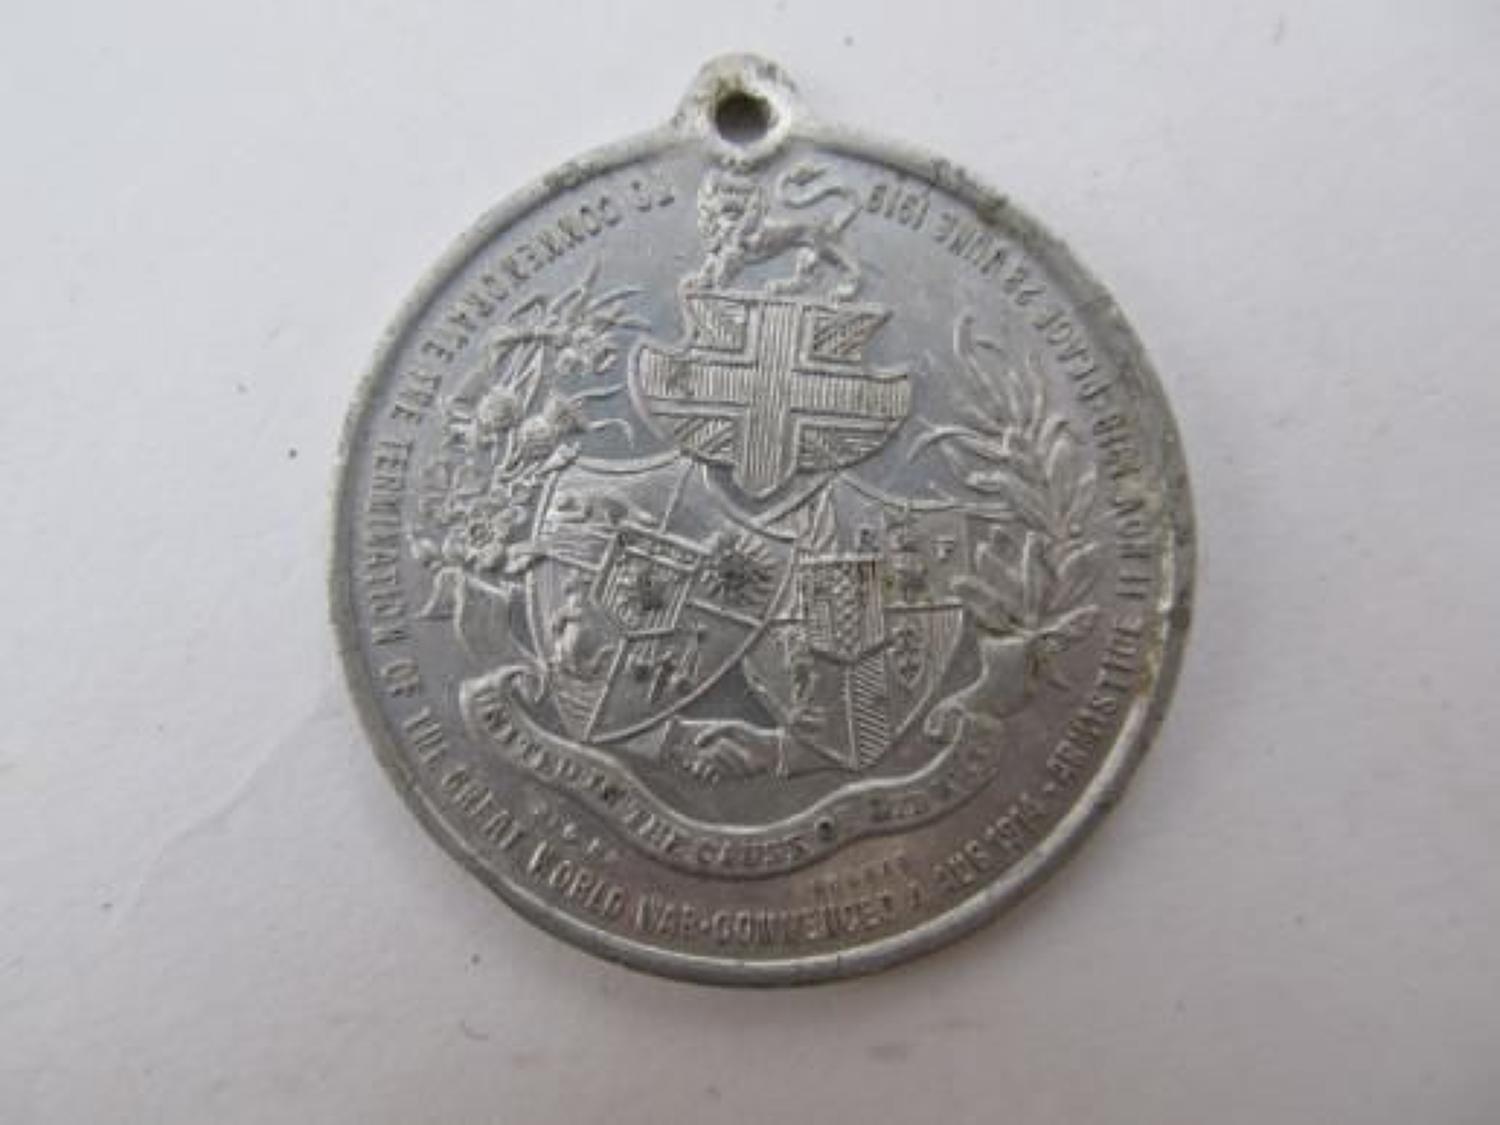 County Borough of Smethick Peace Medal